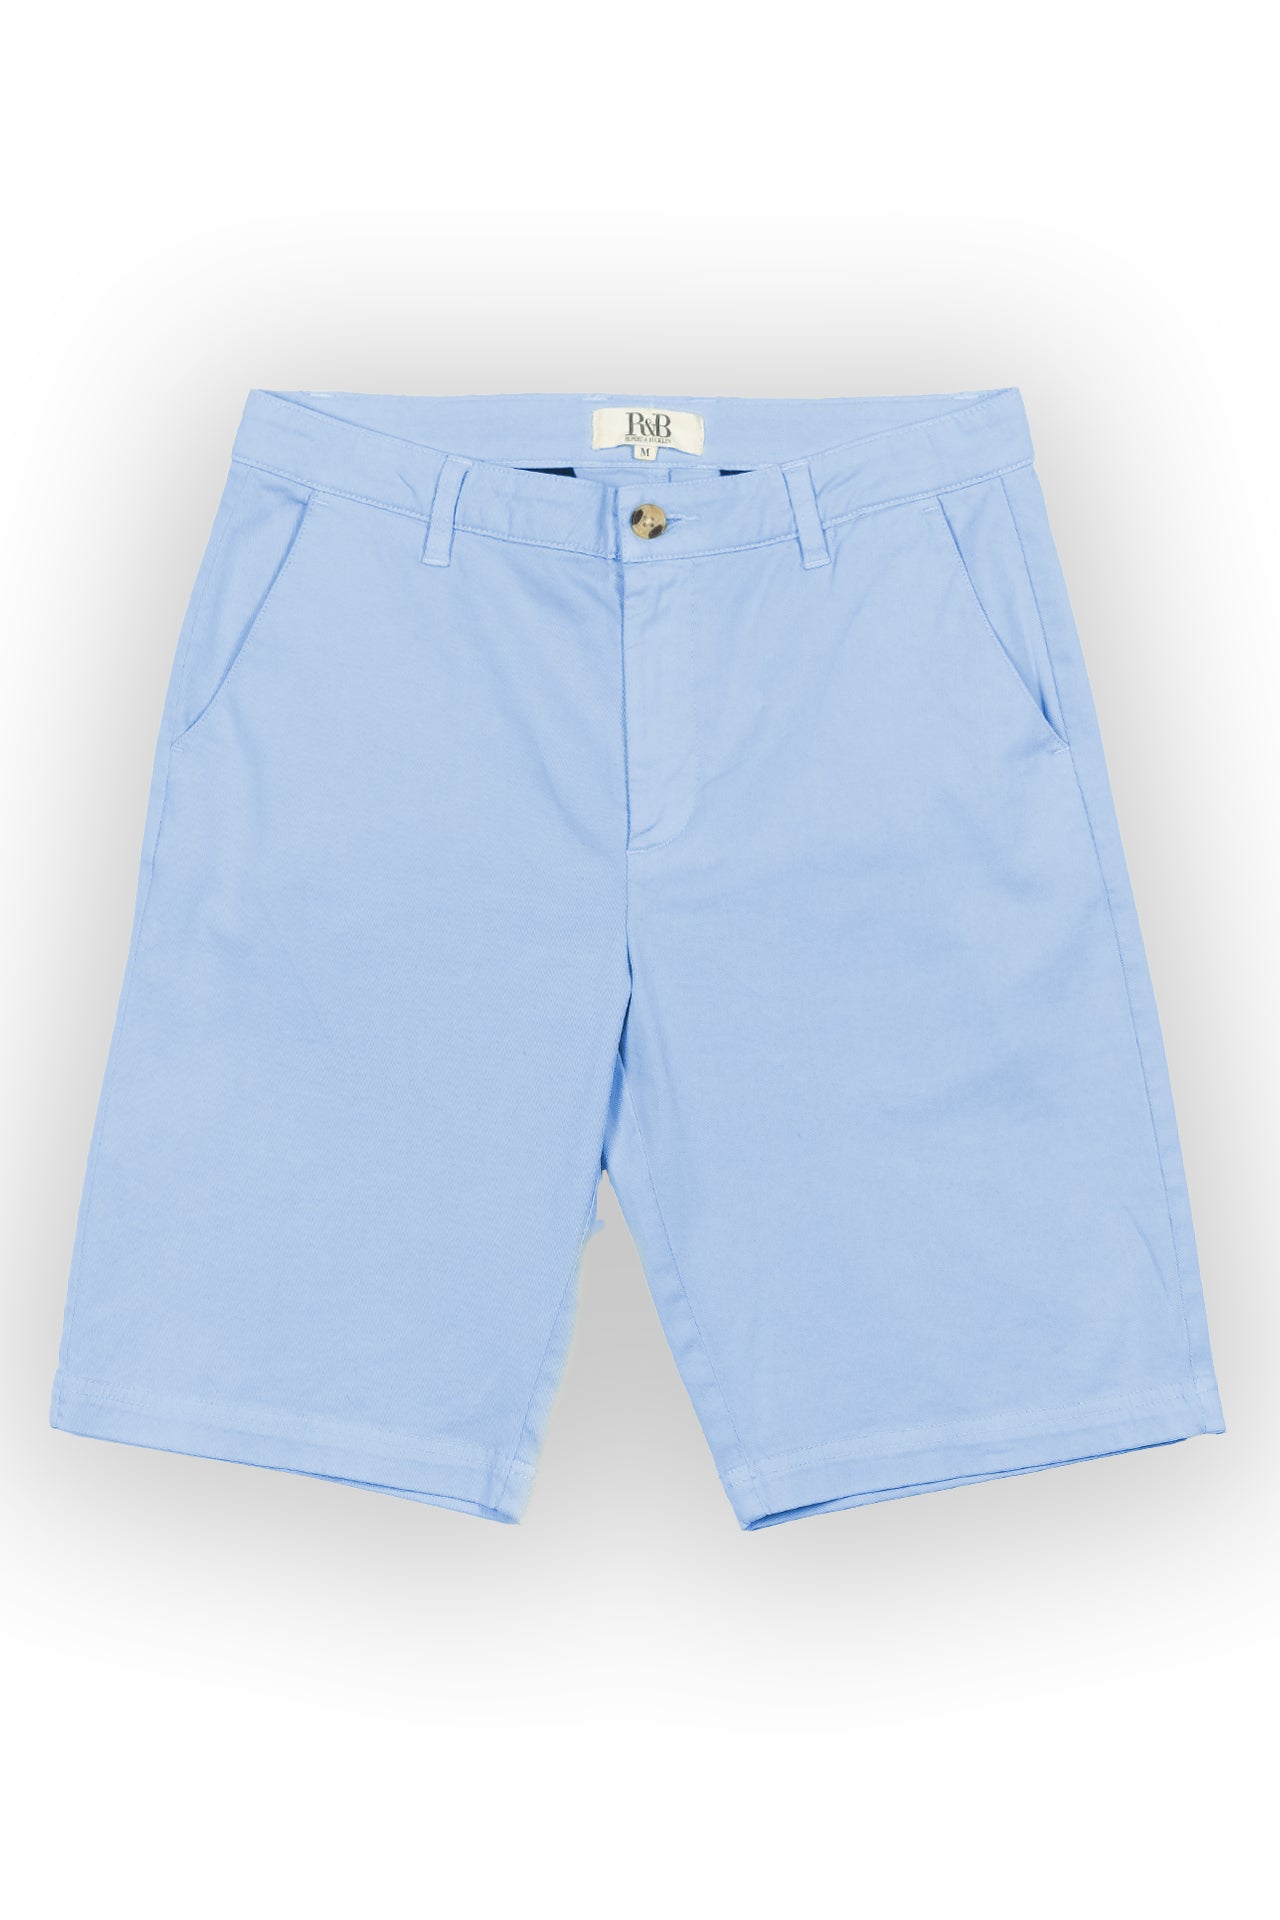 Spencer Blue Chino Shorts - Rupert and Buckley - Shorts